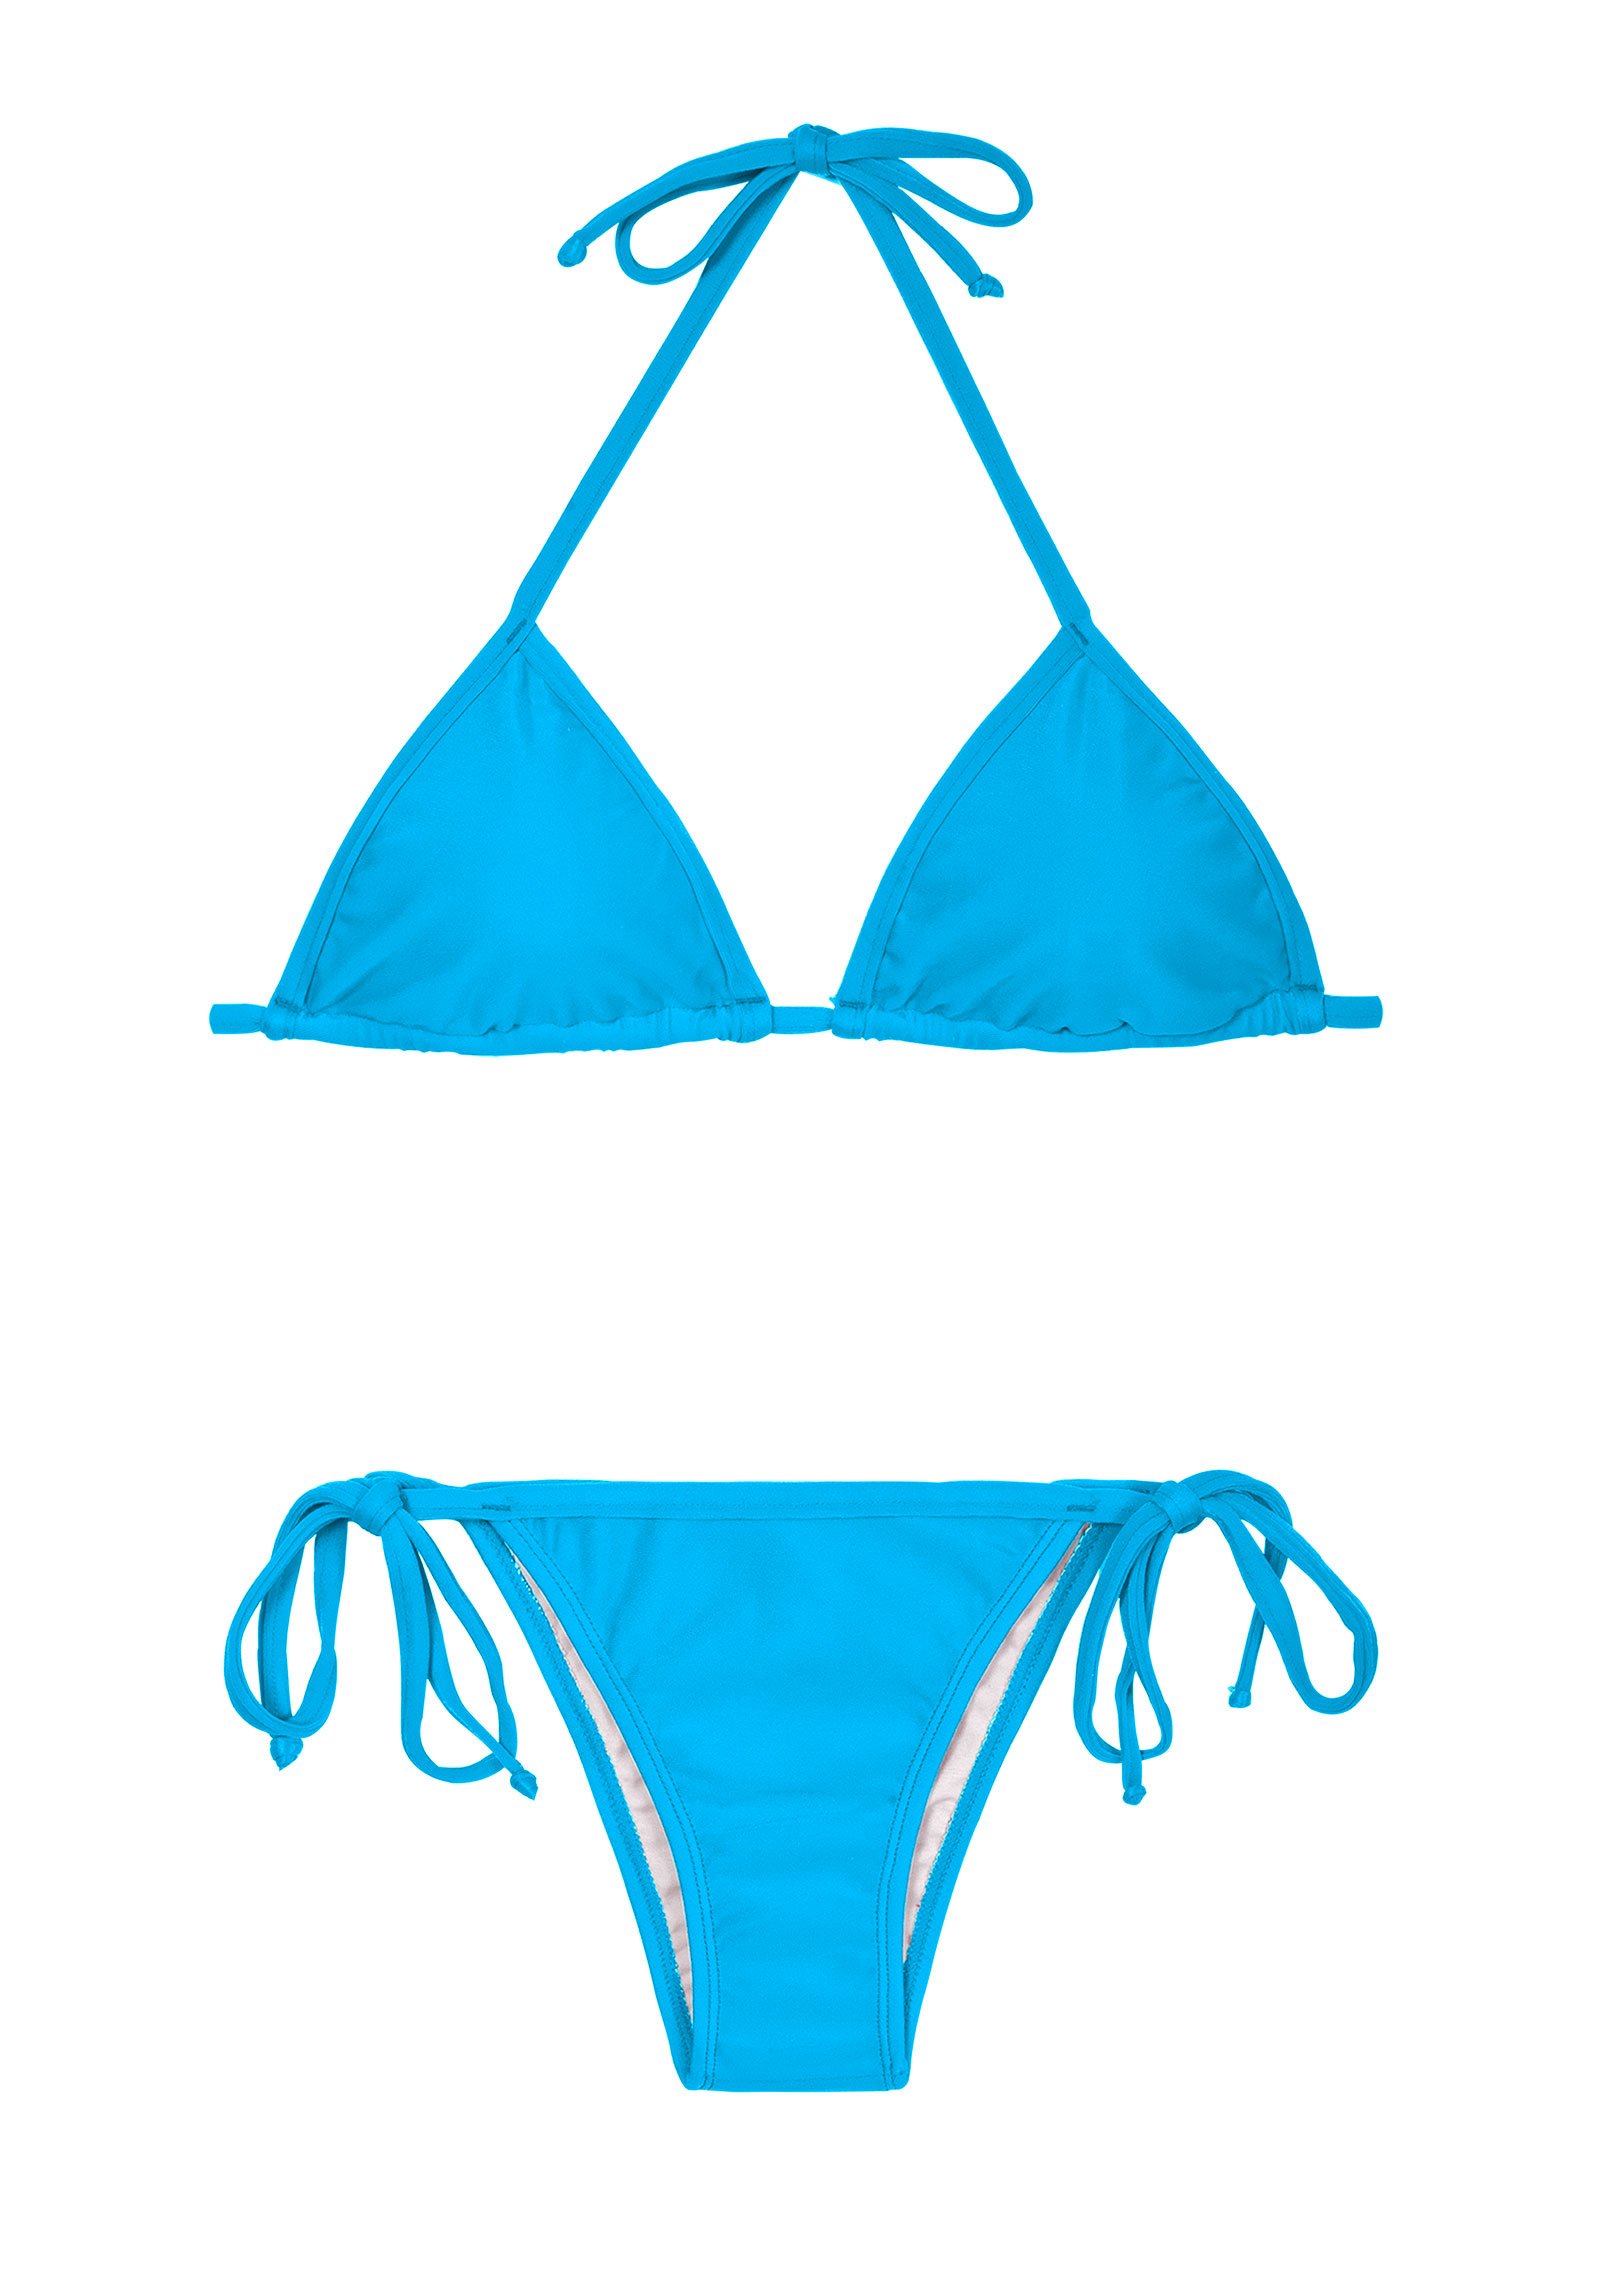 Authentic Triangl Bikini Set Bikinis Blue Bikini Set Bikini Set Hot Hot Sex Picture 1737